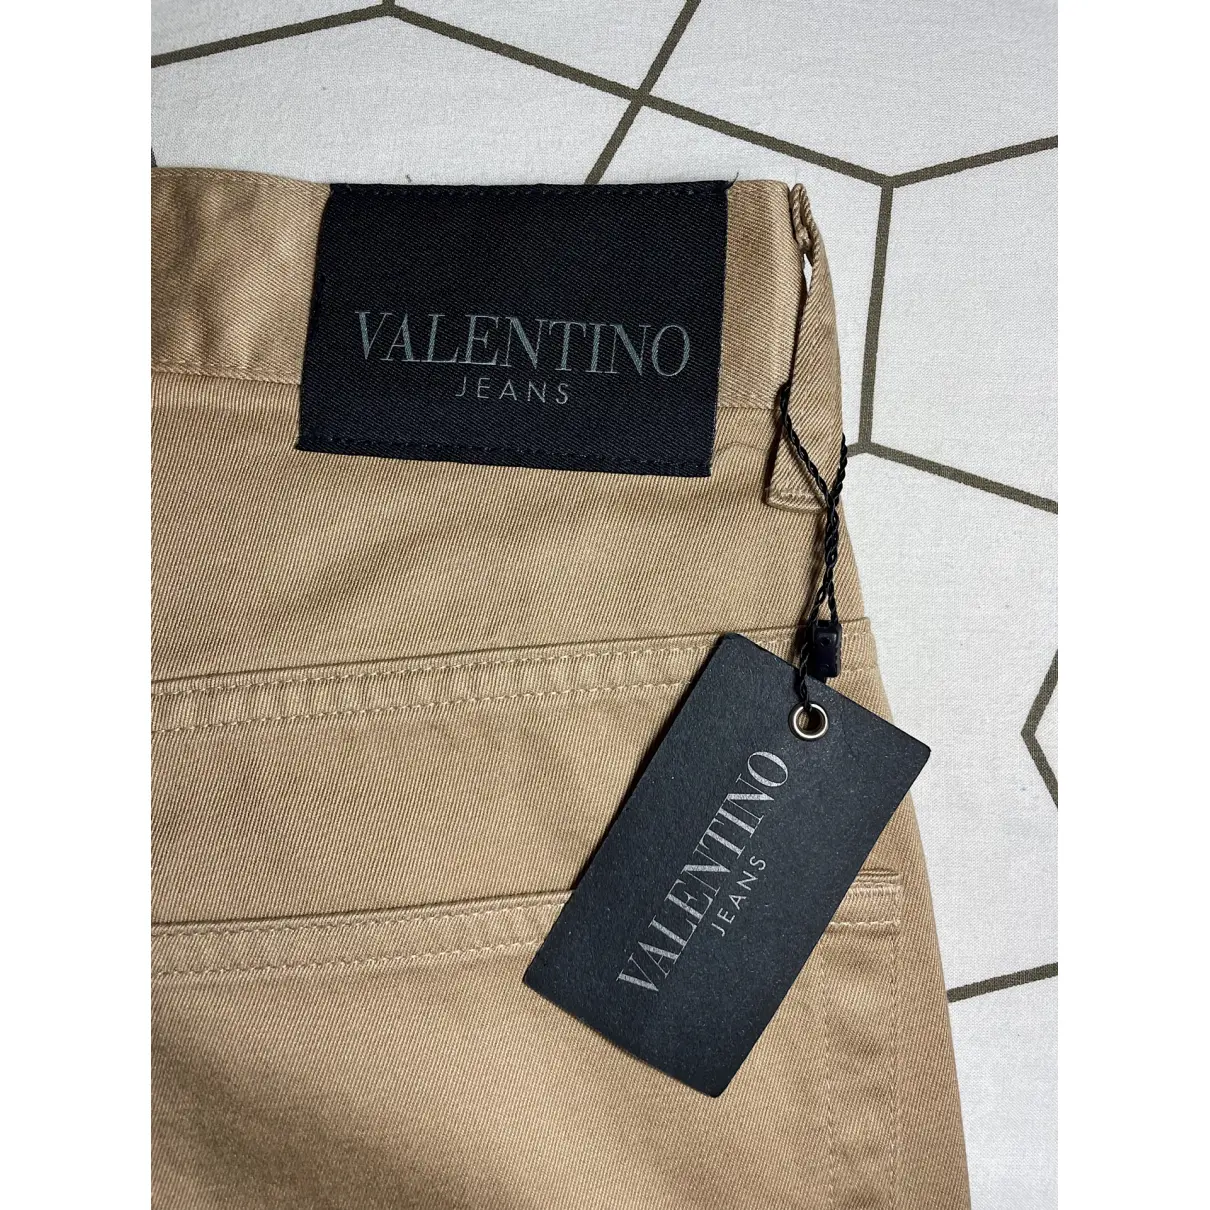 Buy Valentino Garavani Straight pants online